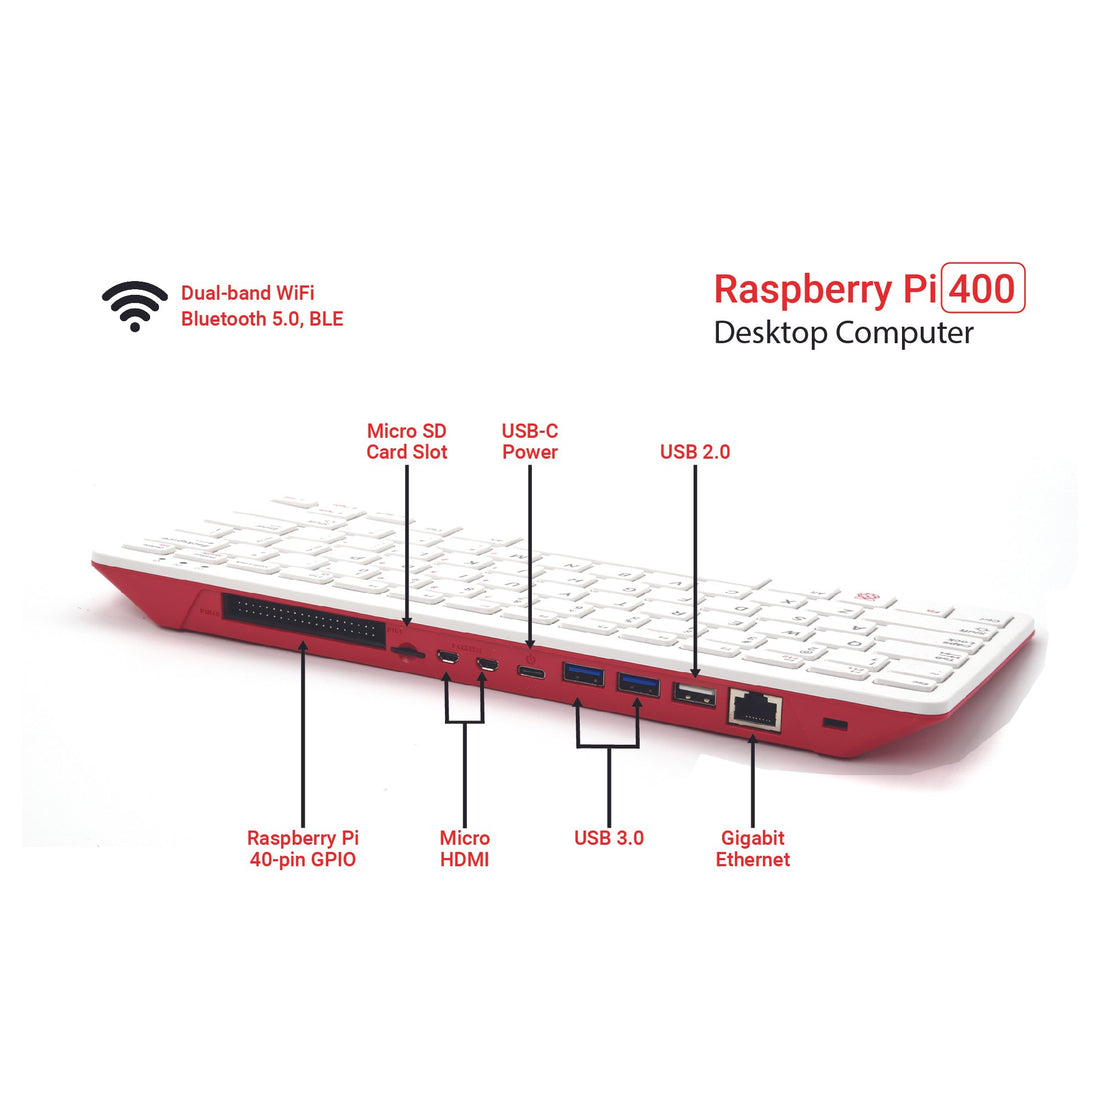 [OPEN BOX] Raspberry Pi 400 Desktop Computer (U.S.)